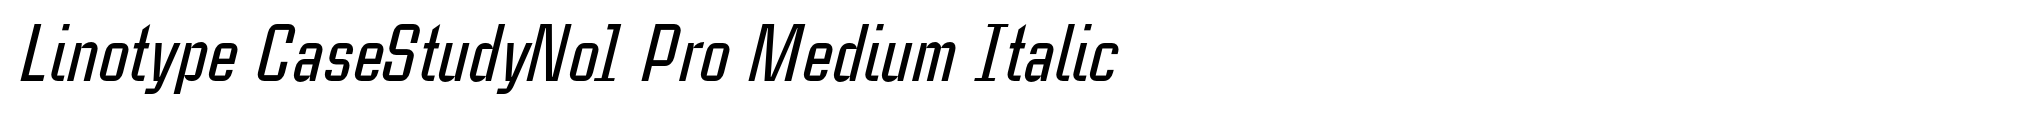 Linotype CaseStudyNo1 Pro Medium Italic image